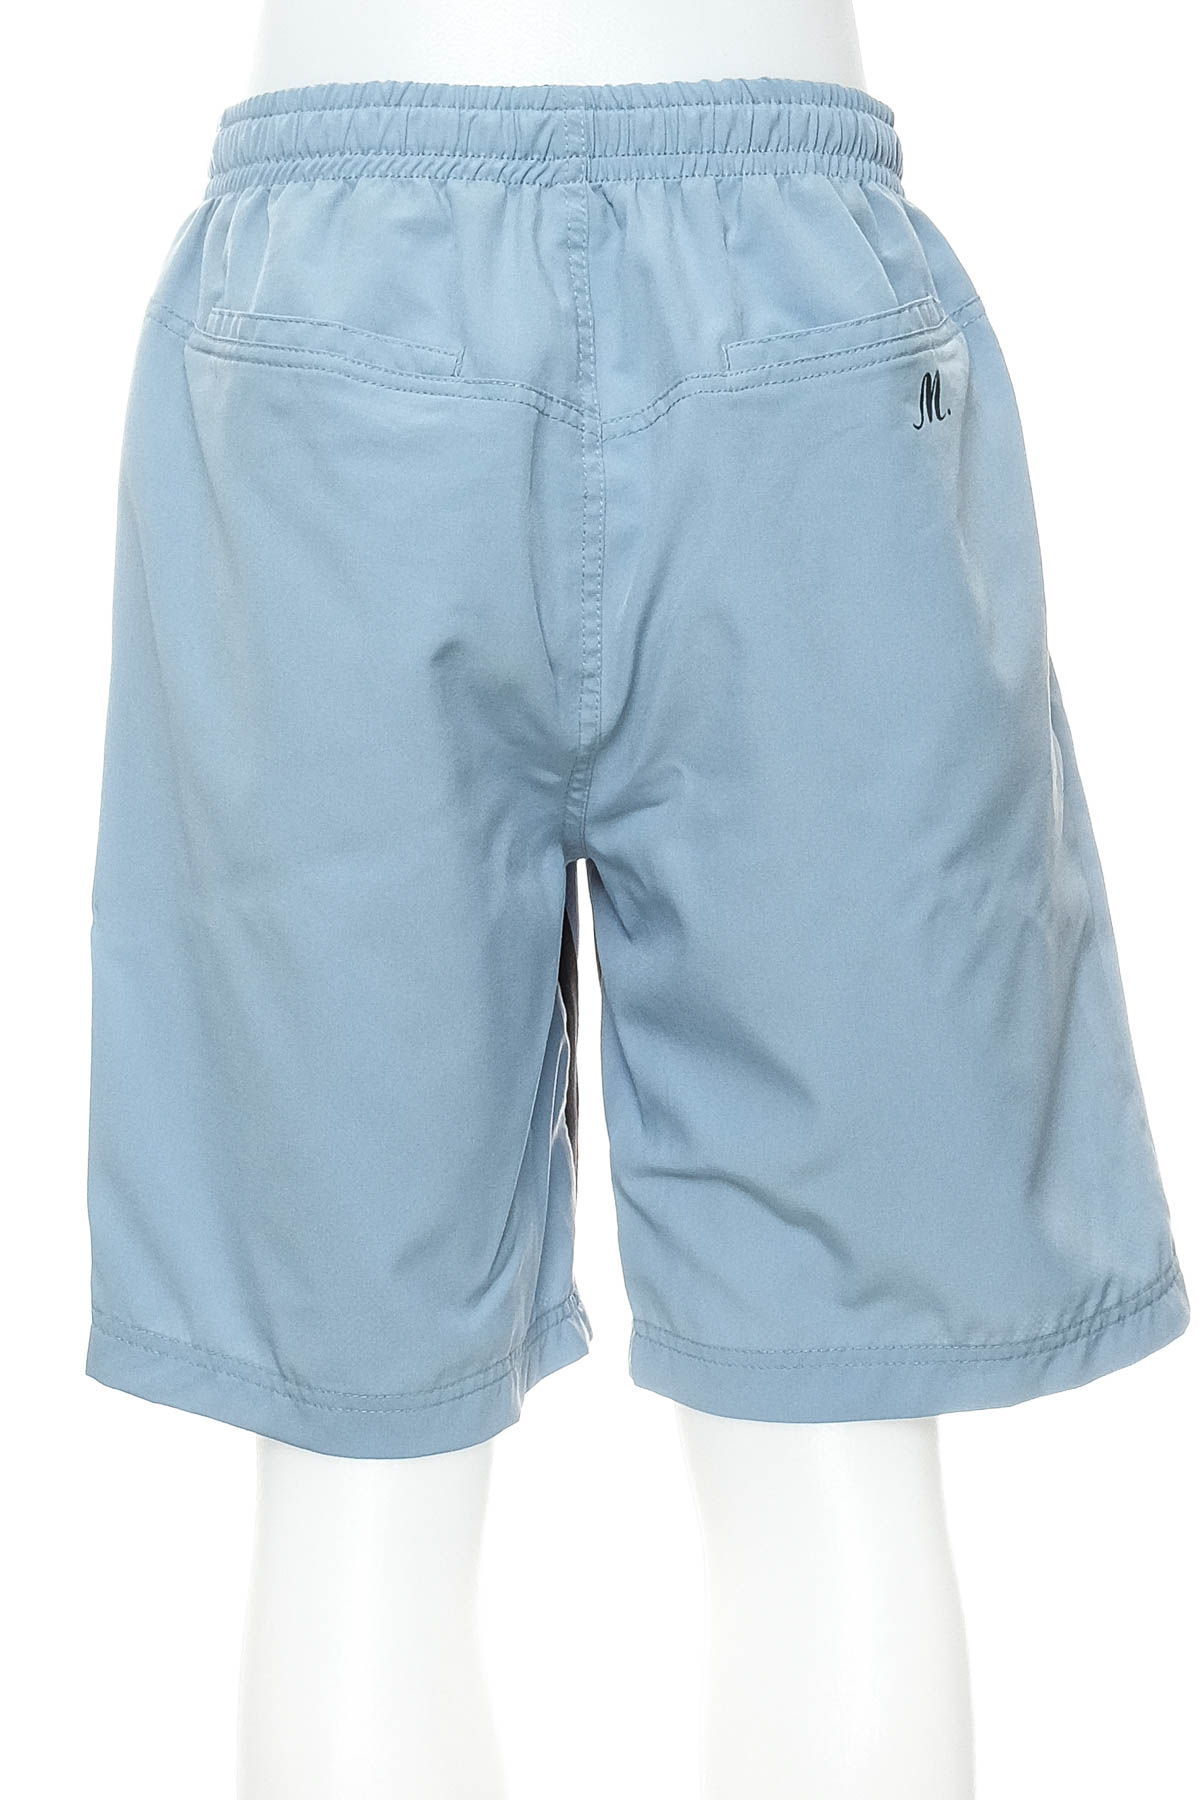 Men's shorts - Mitch & Co - 1